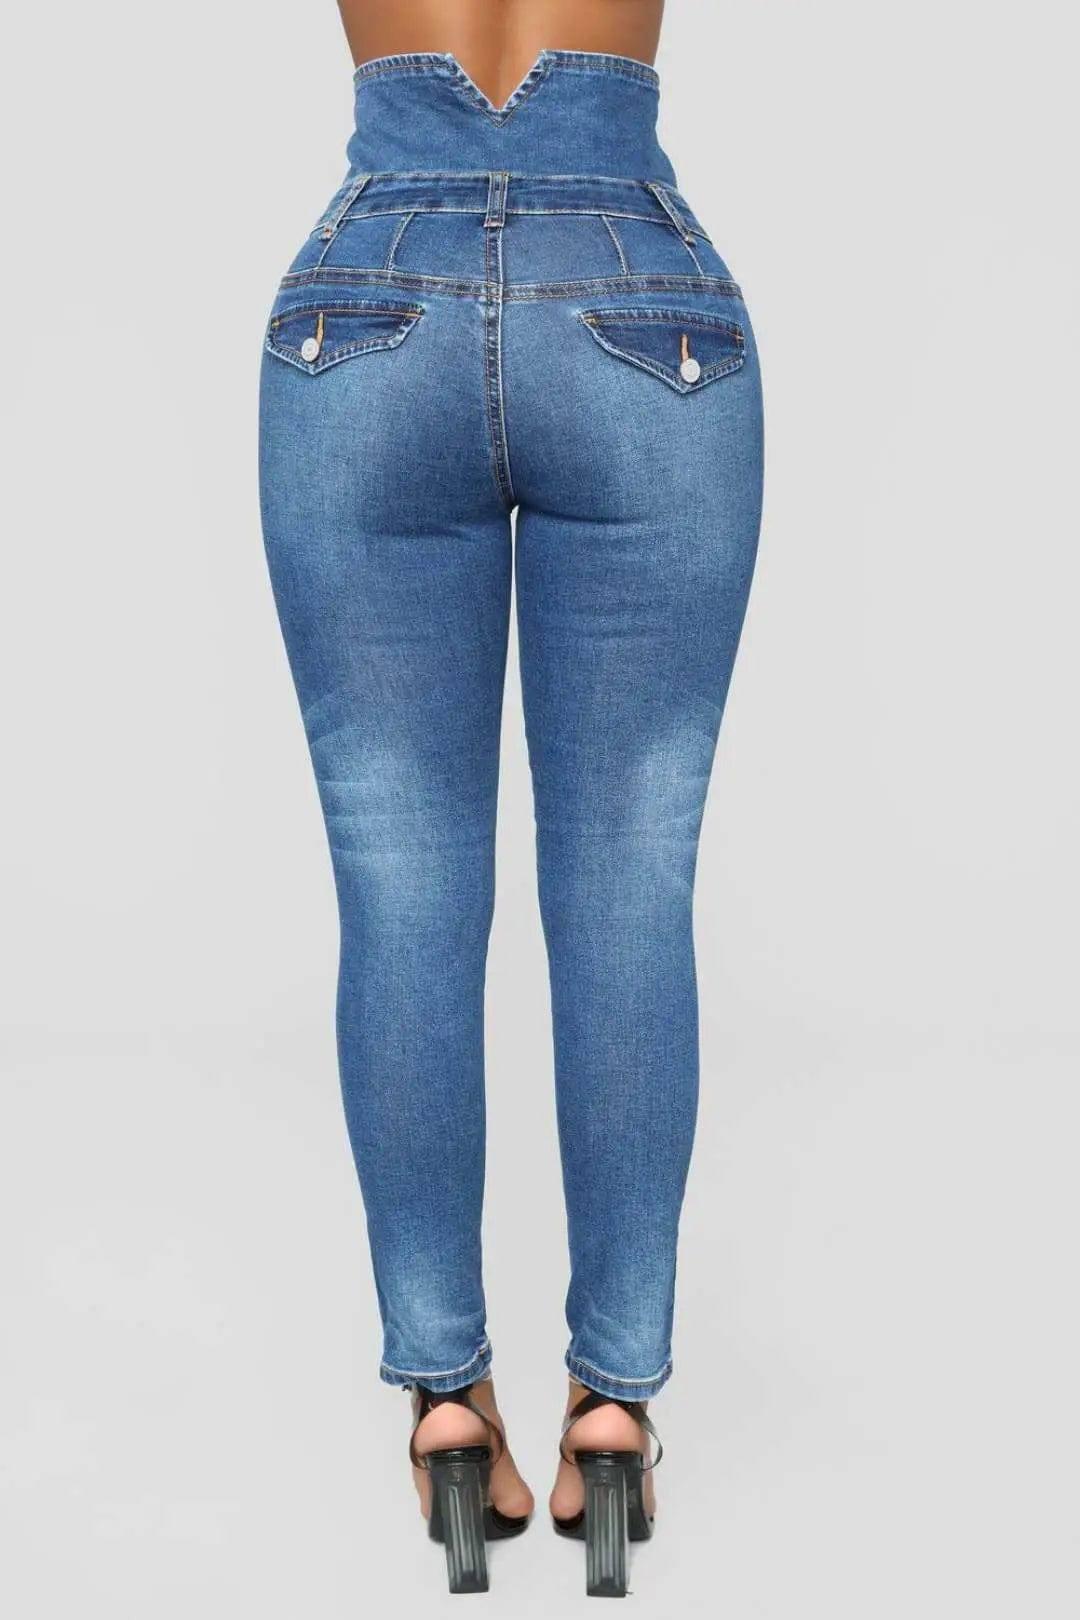 Ripped hole fashion Jeans Women High Waist skinny pencil-3